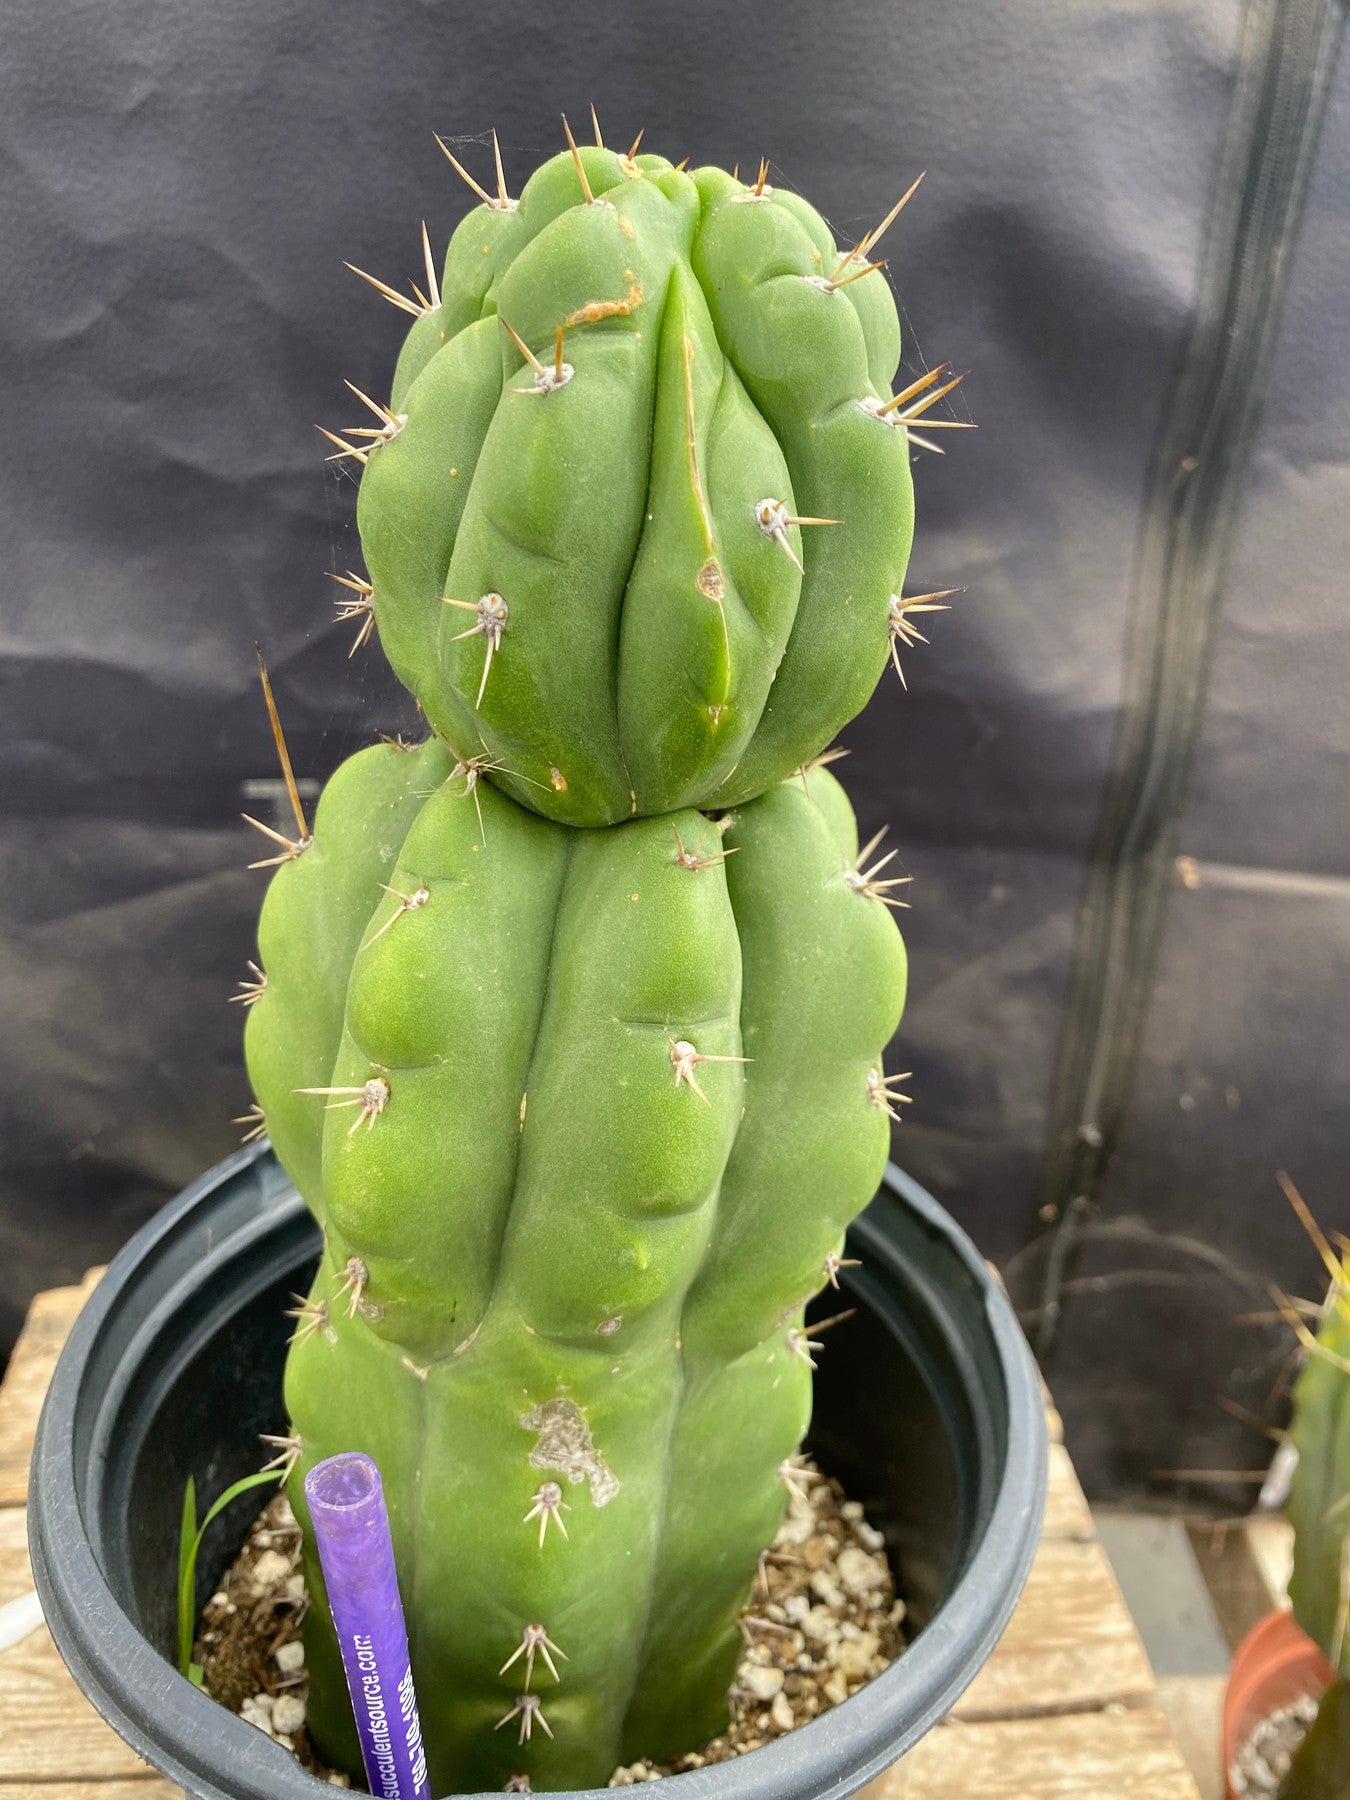 #EC169 EXACT Trichocereus Pachanoi Monstrose TPM Cactus 10”-Cactus - Large - Exact-The Succulent Source